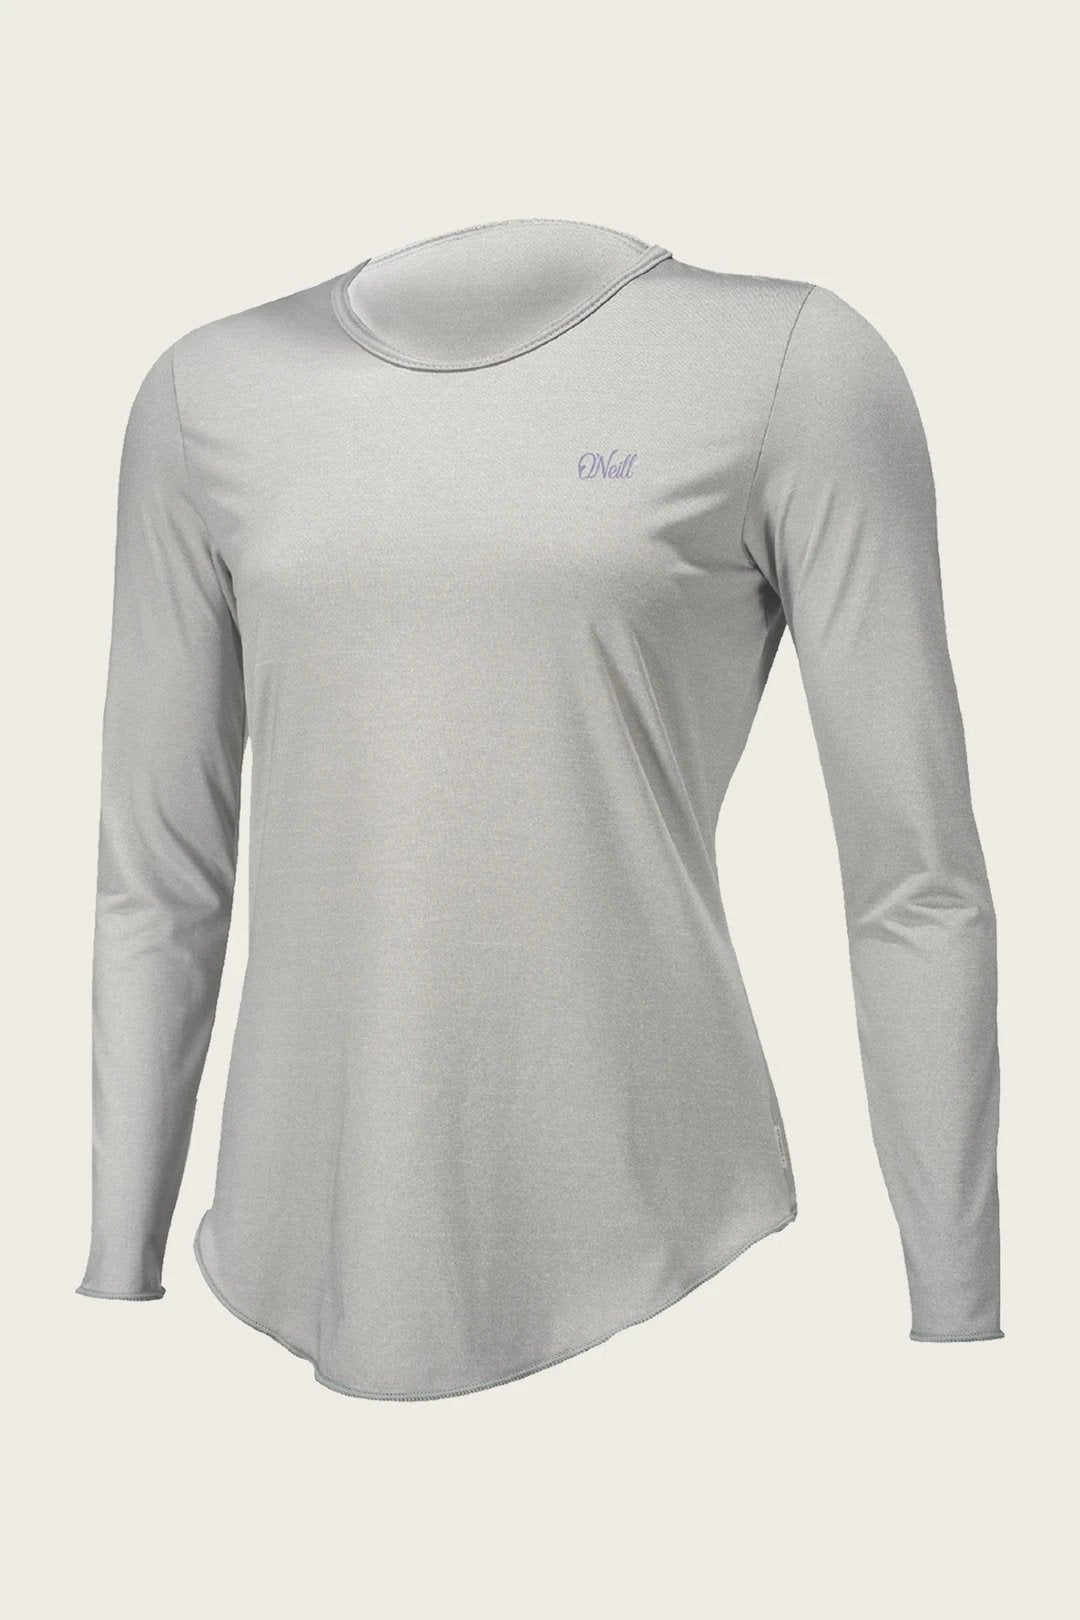 O'Neill Blueprint L/S Sun Shirt Rashguard - Women's - Medium,Overcast